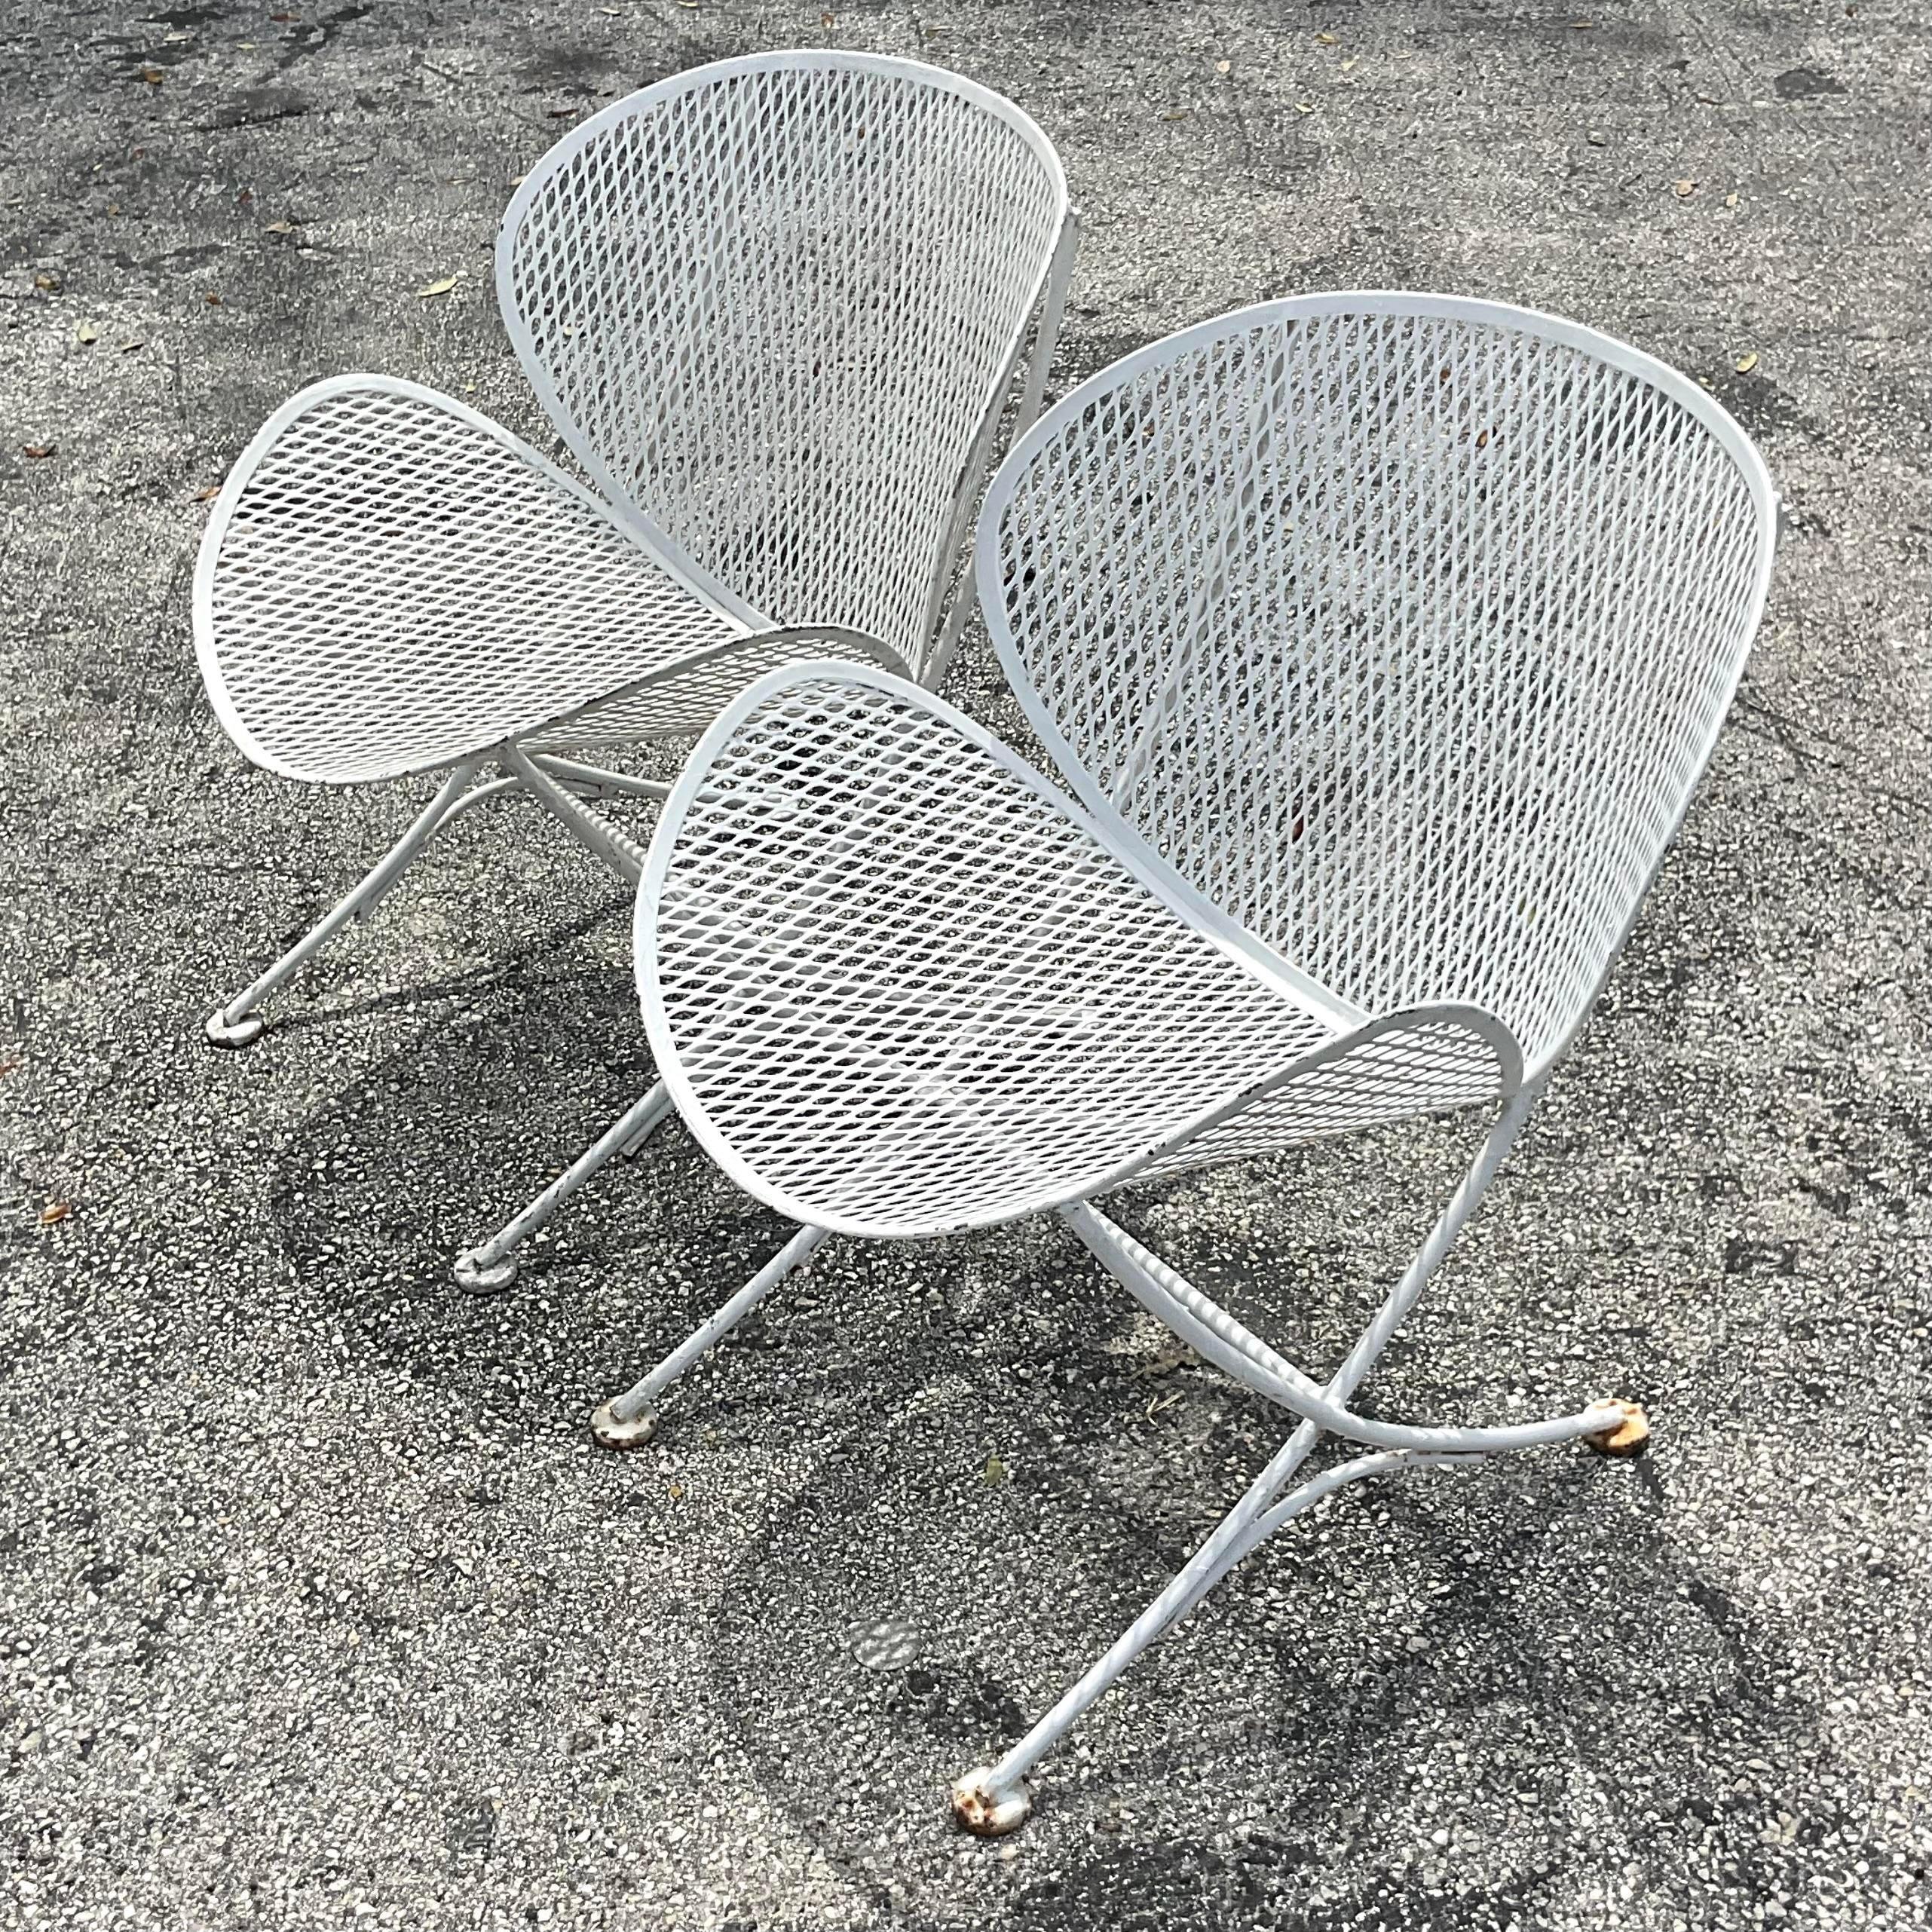 Vintage Mid-Century Modern Salterini Wrought Iron “Orange Slice” Chairs - a Pair For Sale 2